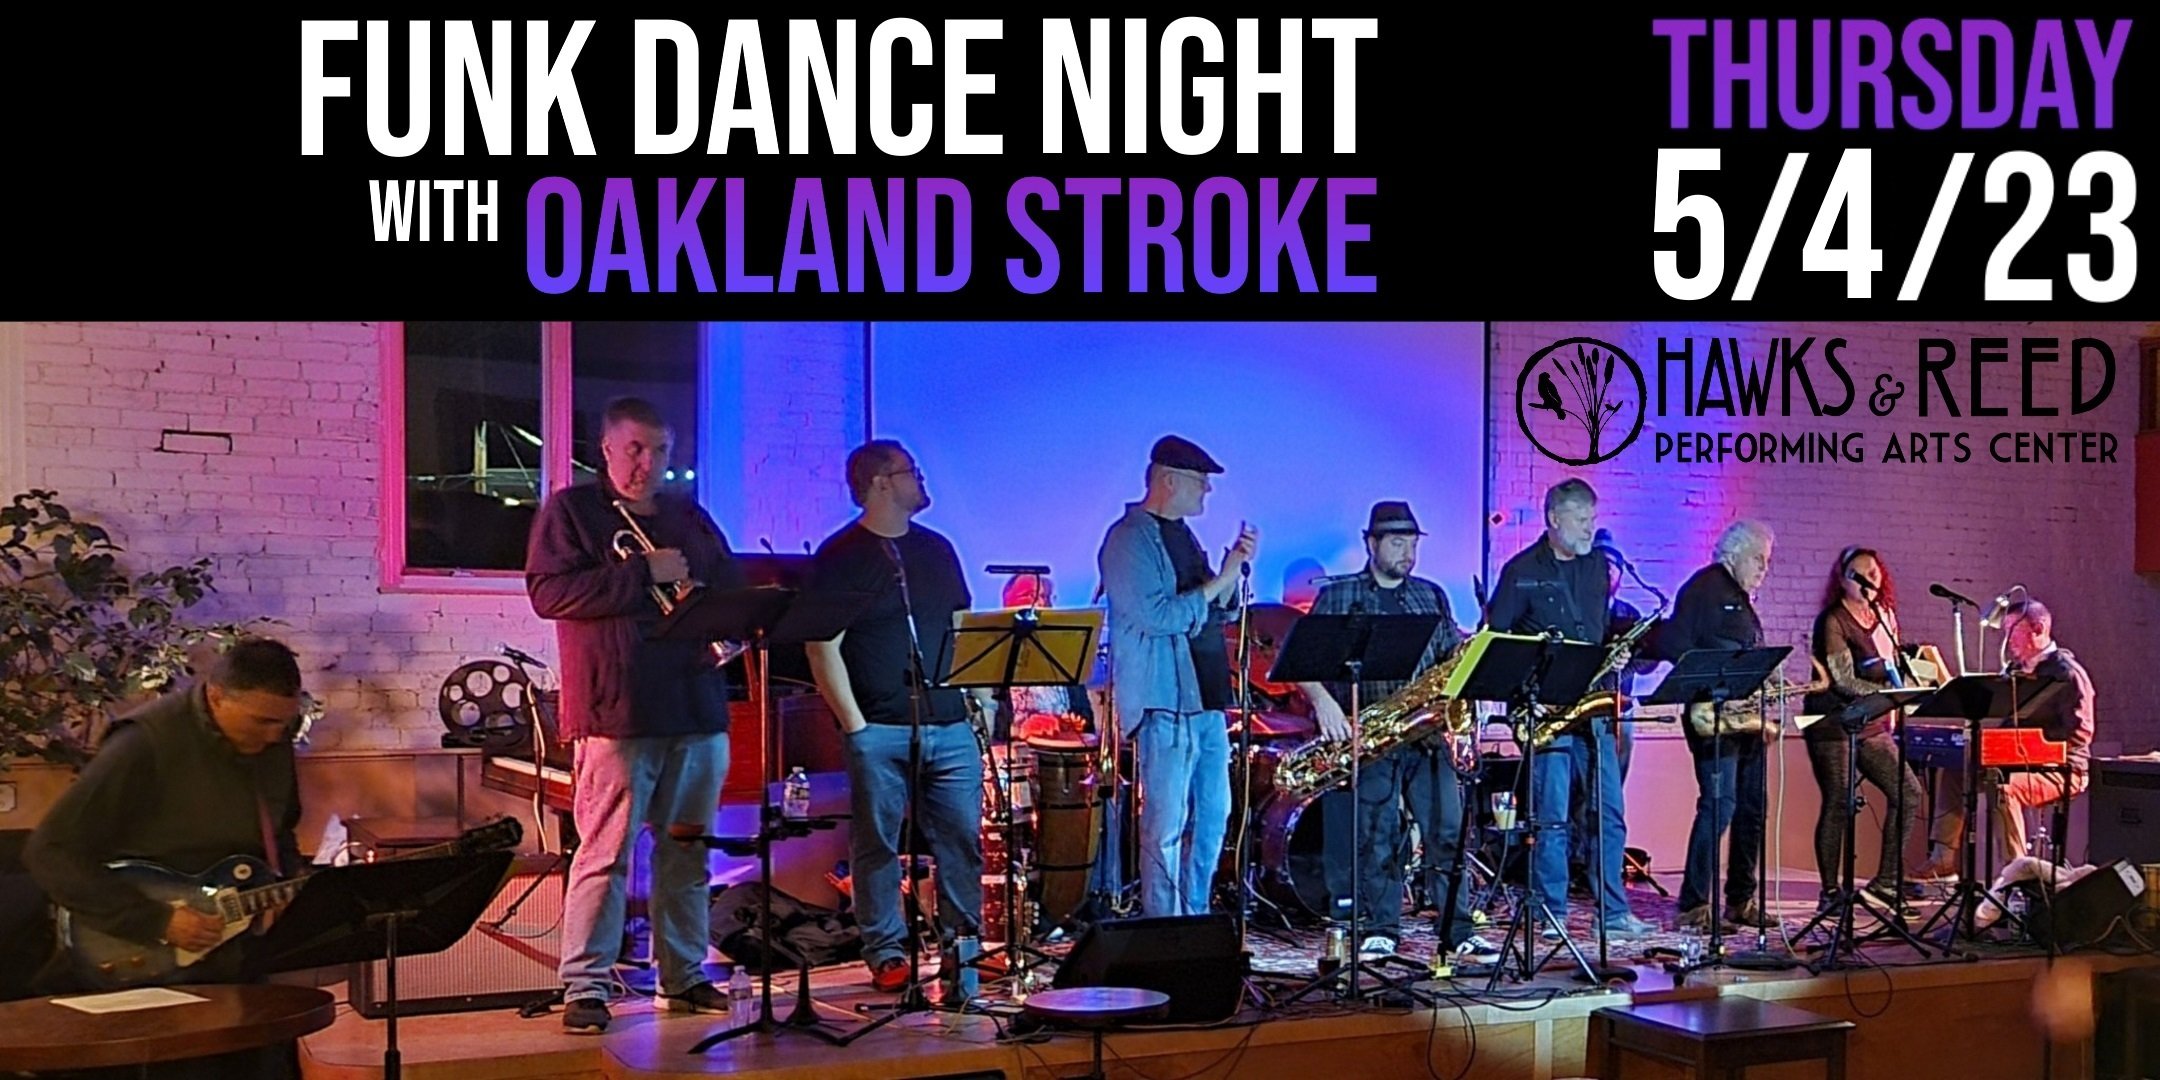 Funk Dance Night with Oakland Stroke